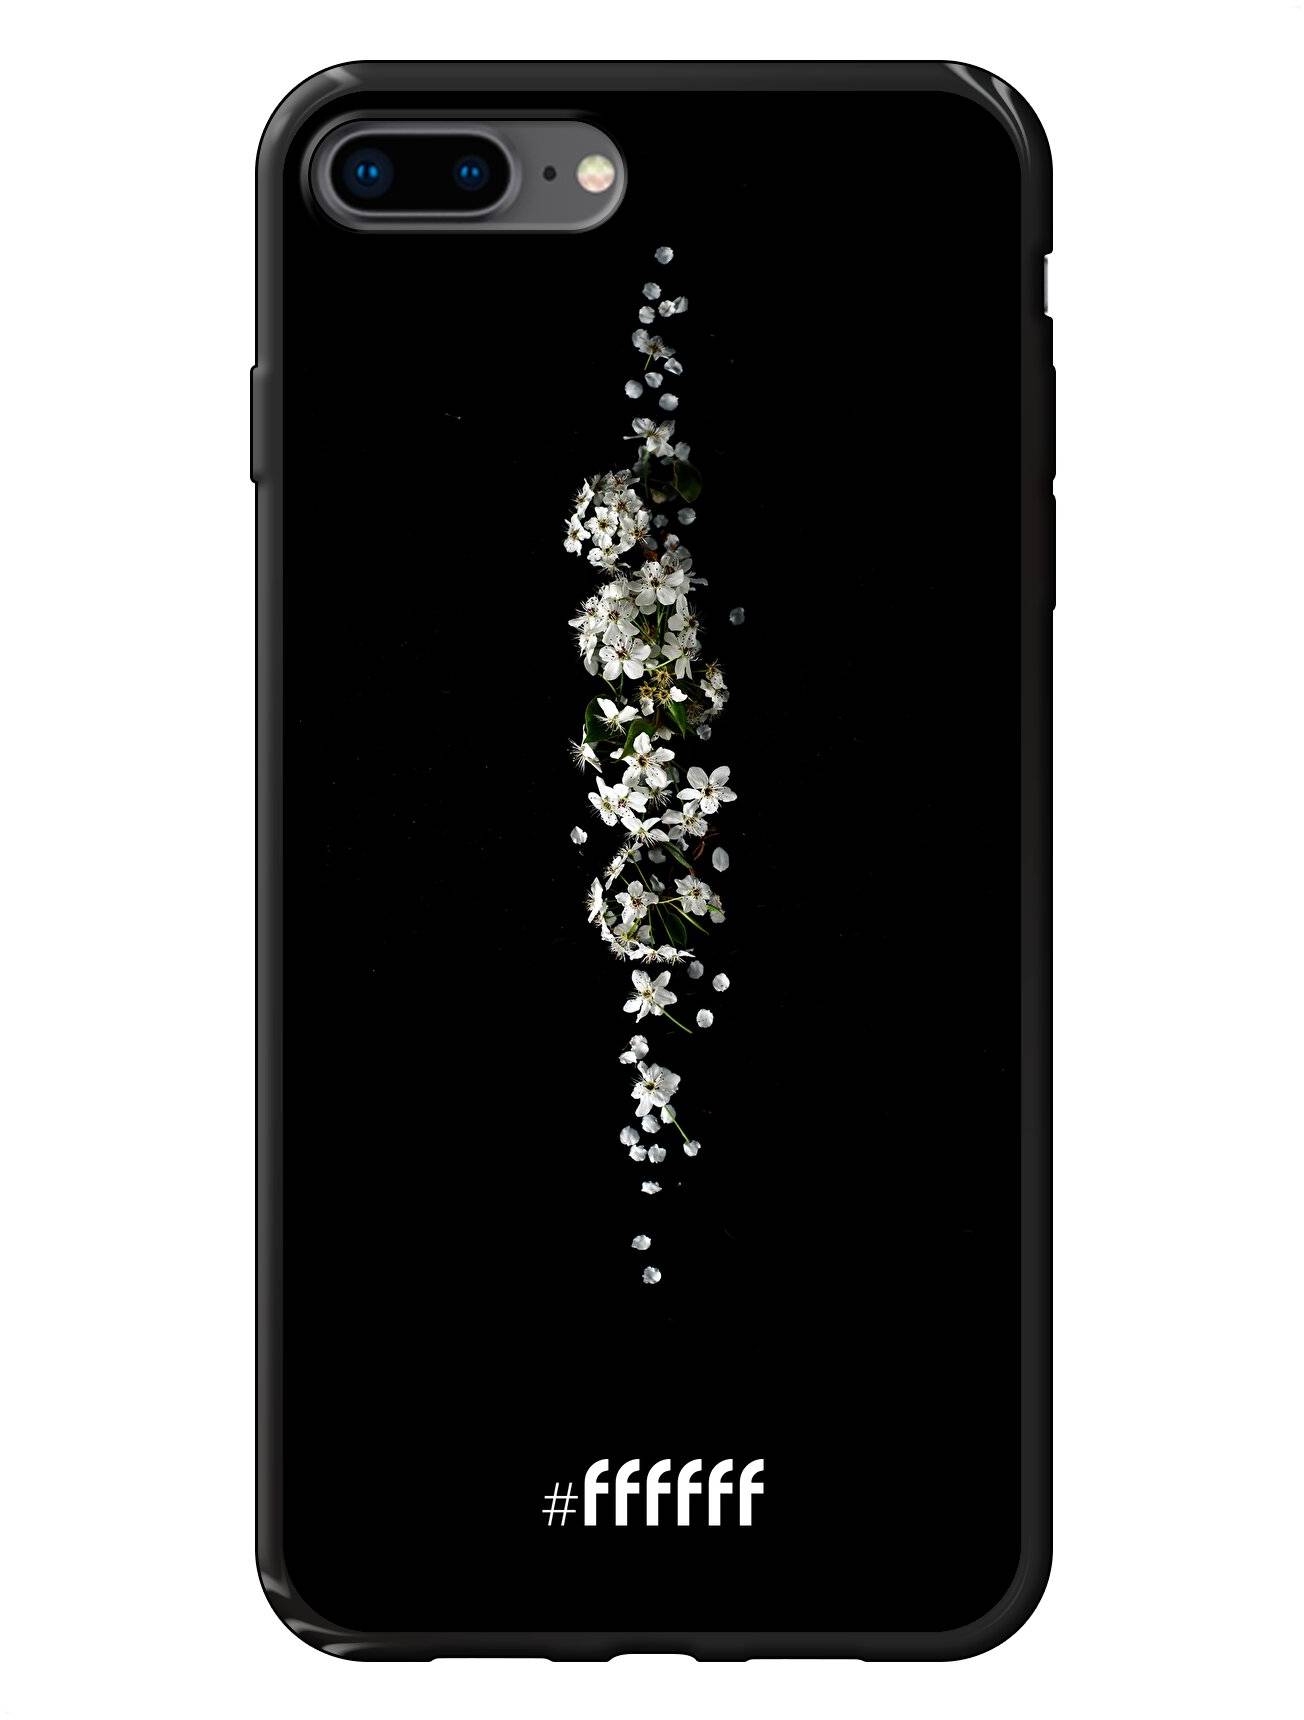 White flowers in the dark iPhone 8 Plus